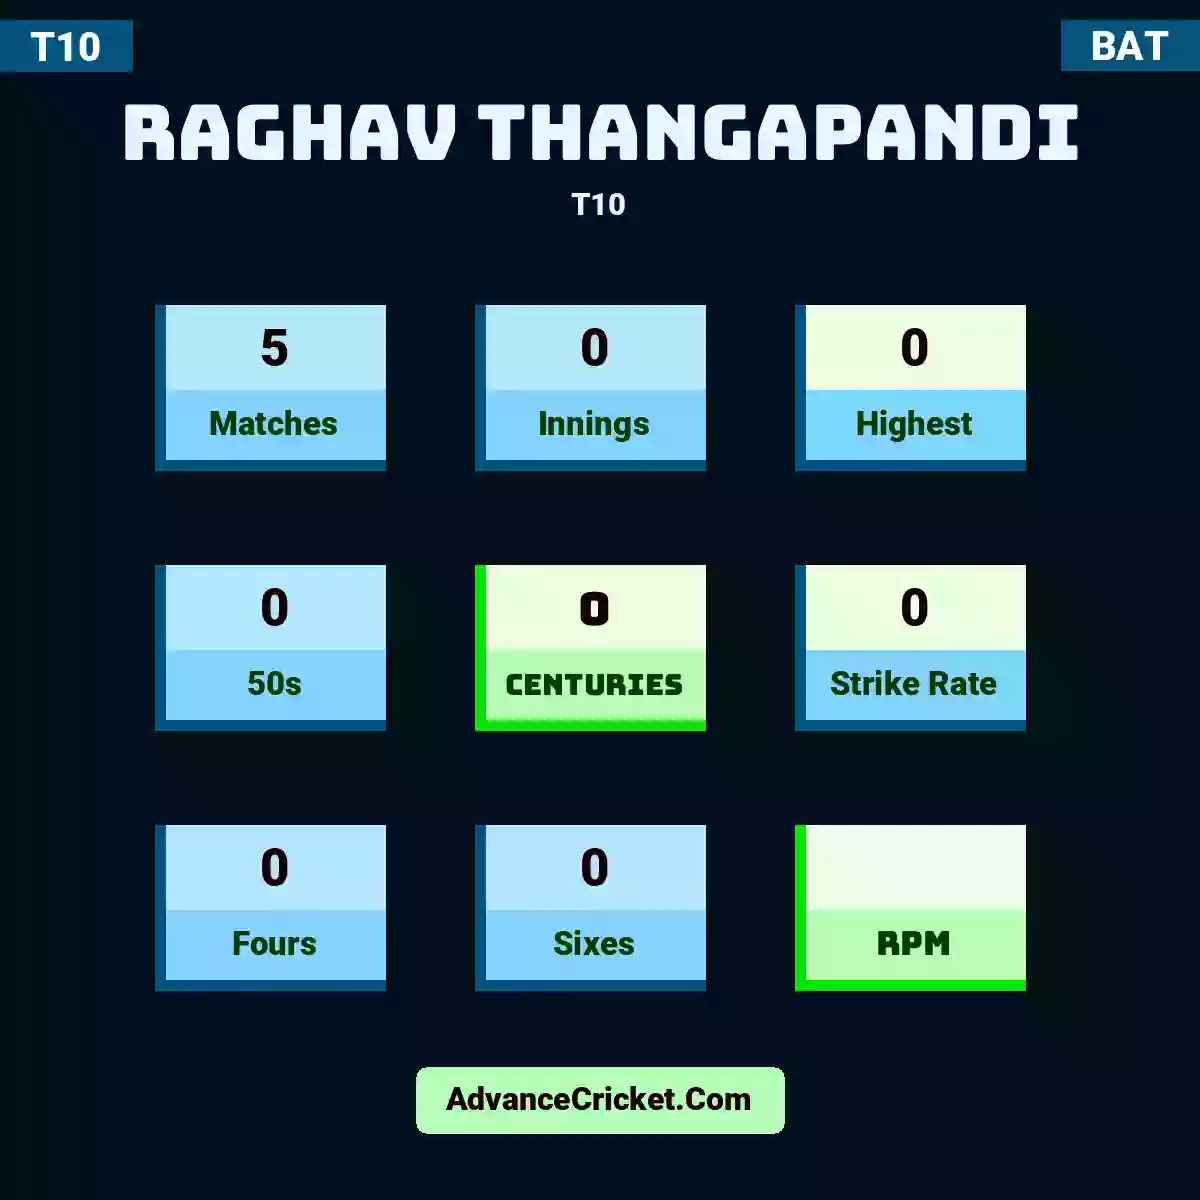 Raghav Thangapandi T10 , Raghav Thangapandi played 5 matches, scored 0 runs as highest, 0 half-centuries, and 0 centuries, with a strike rate of 0. R.Thangapandi hit 0 fours and 0 sixes.